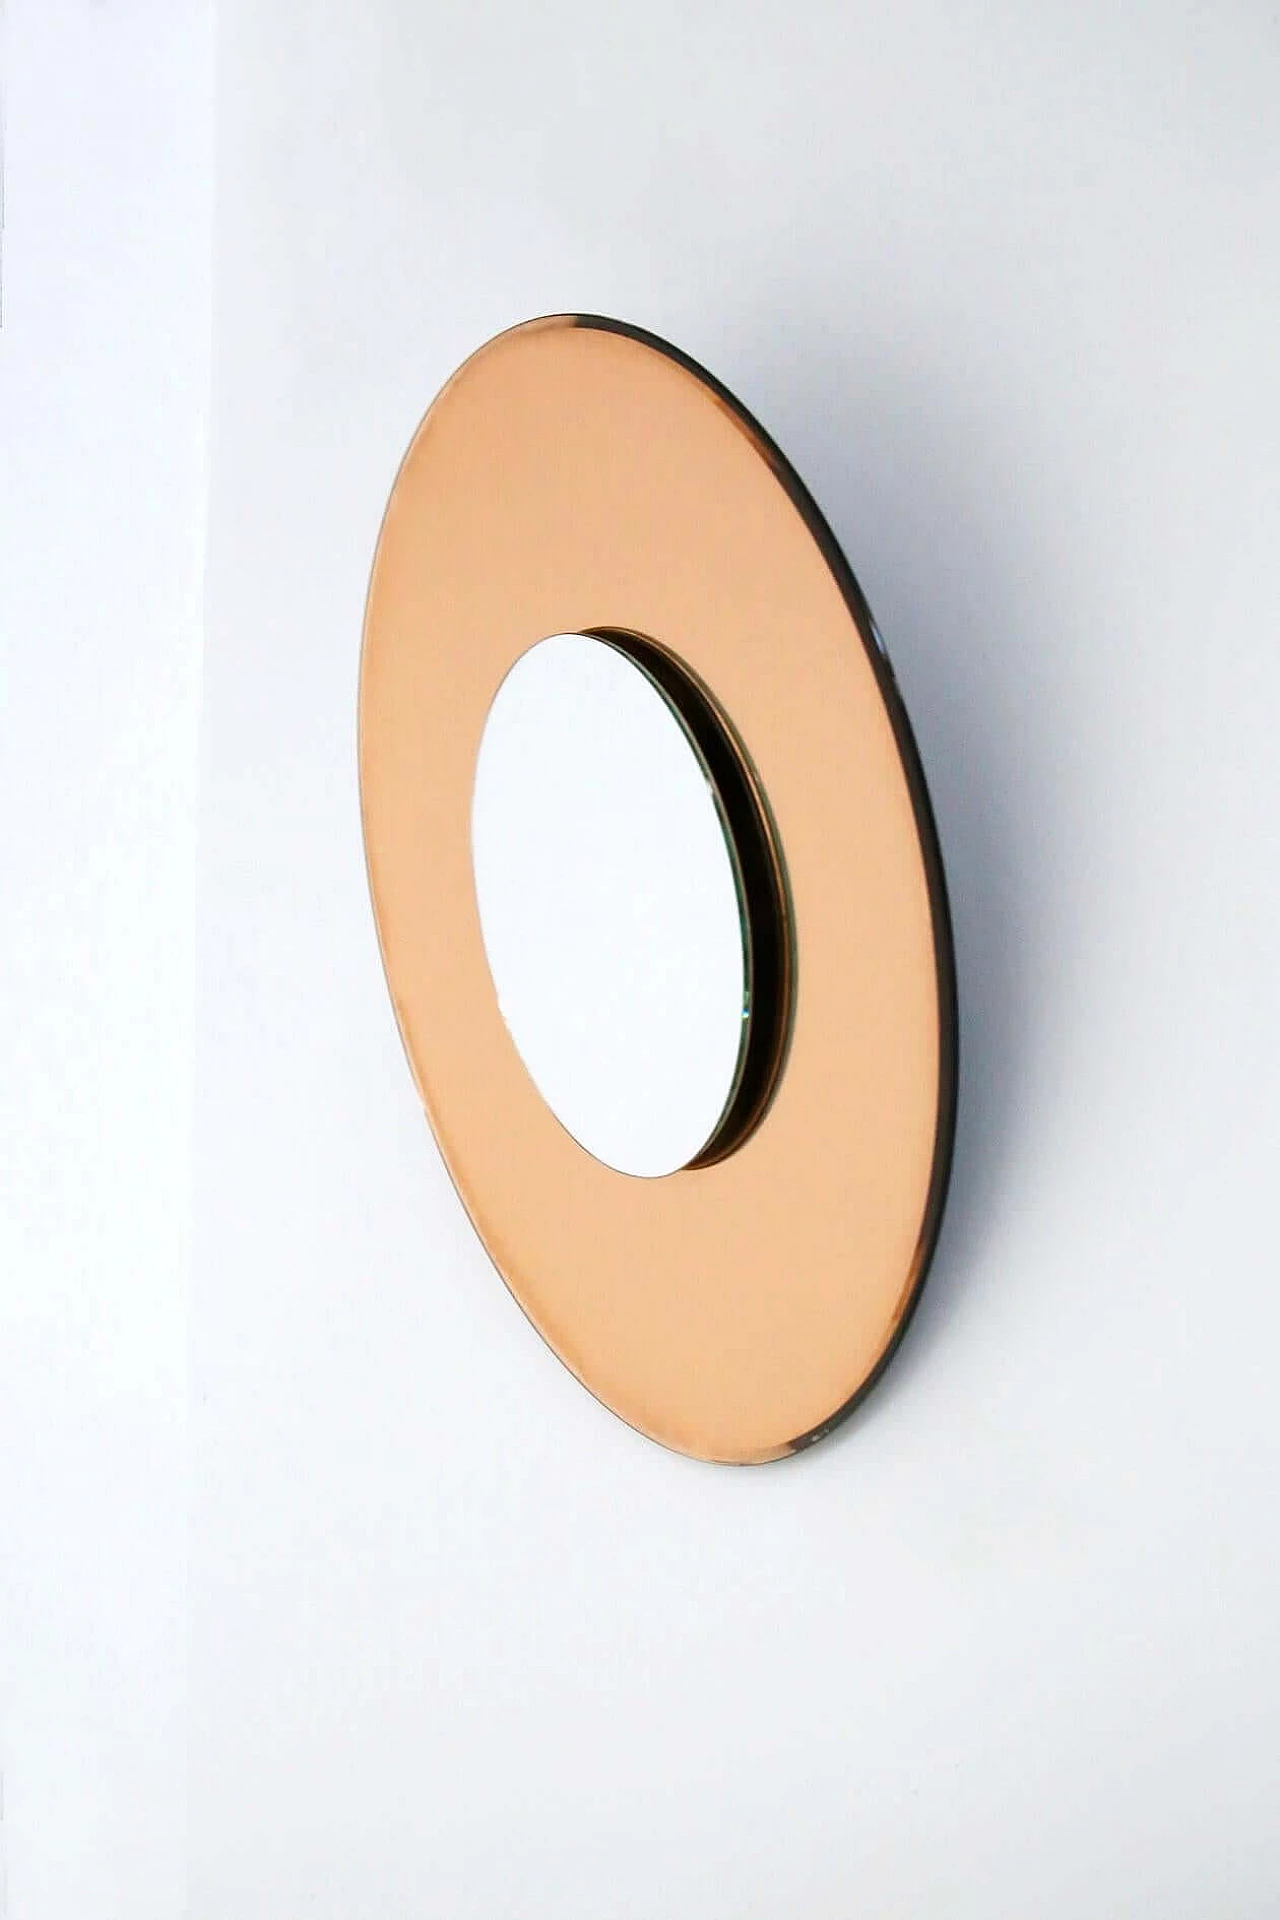 Round orange mirror in FontanaArte style by Effetto Vetro, 2000s 1387885